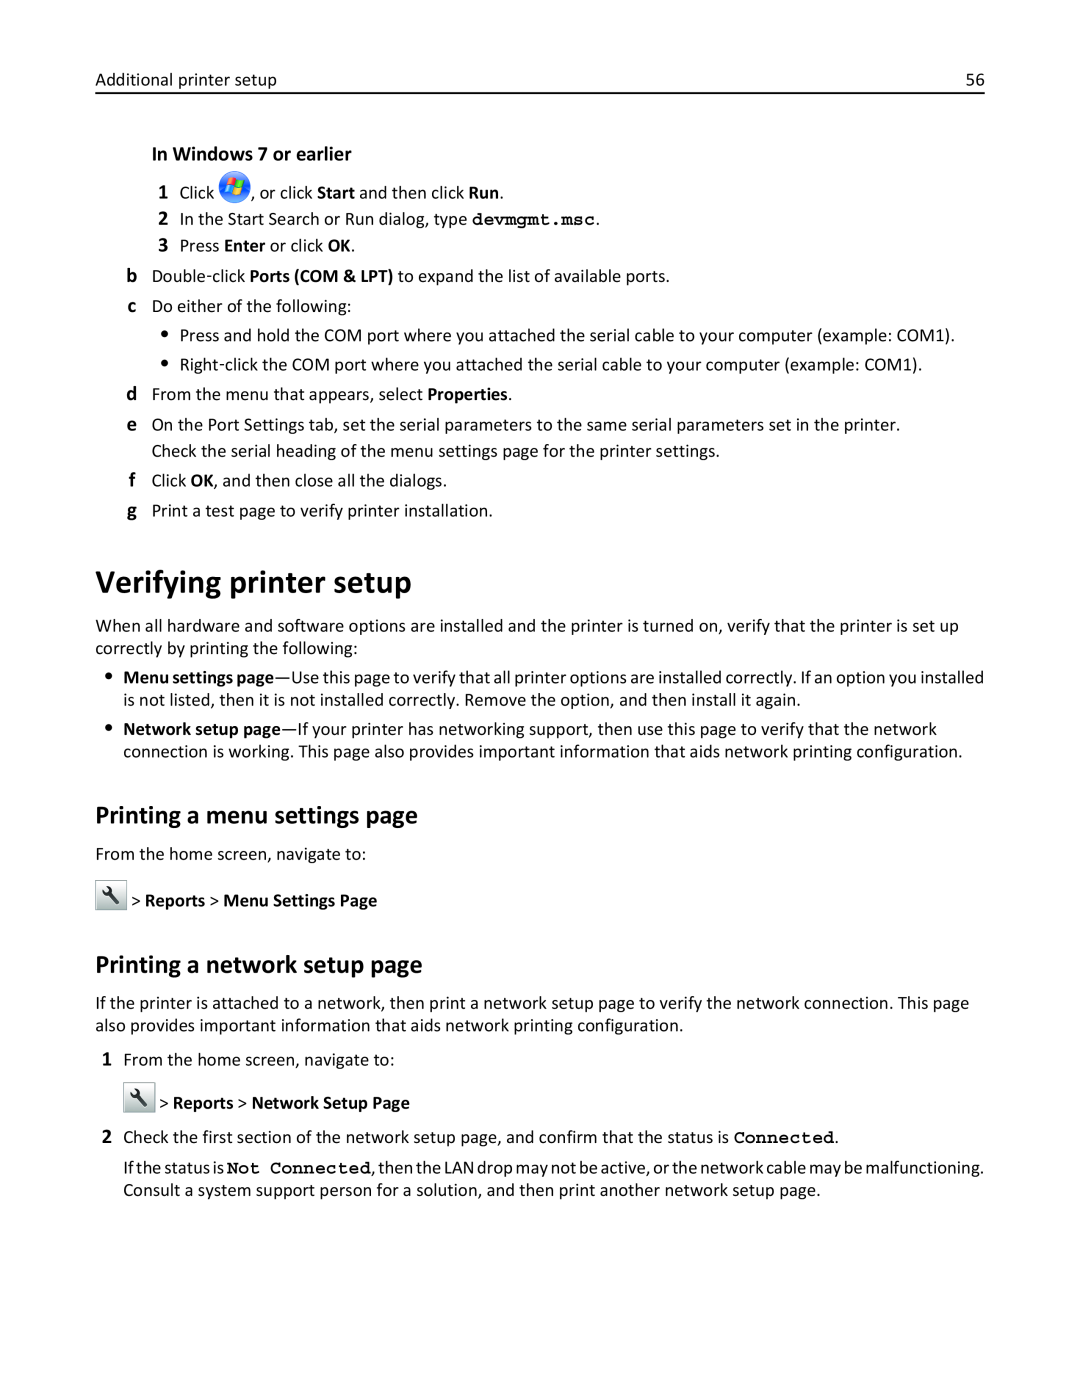 Lexmark 470 Verifying printer setup, Printing a menu settings page, Printing a network setup page, In Windows 7 or earlier 